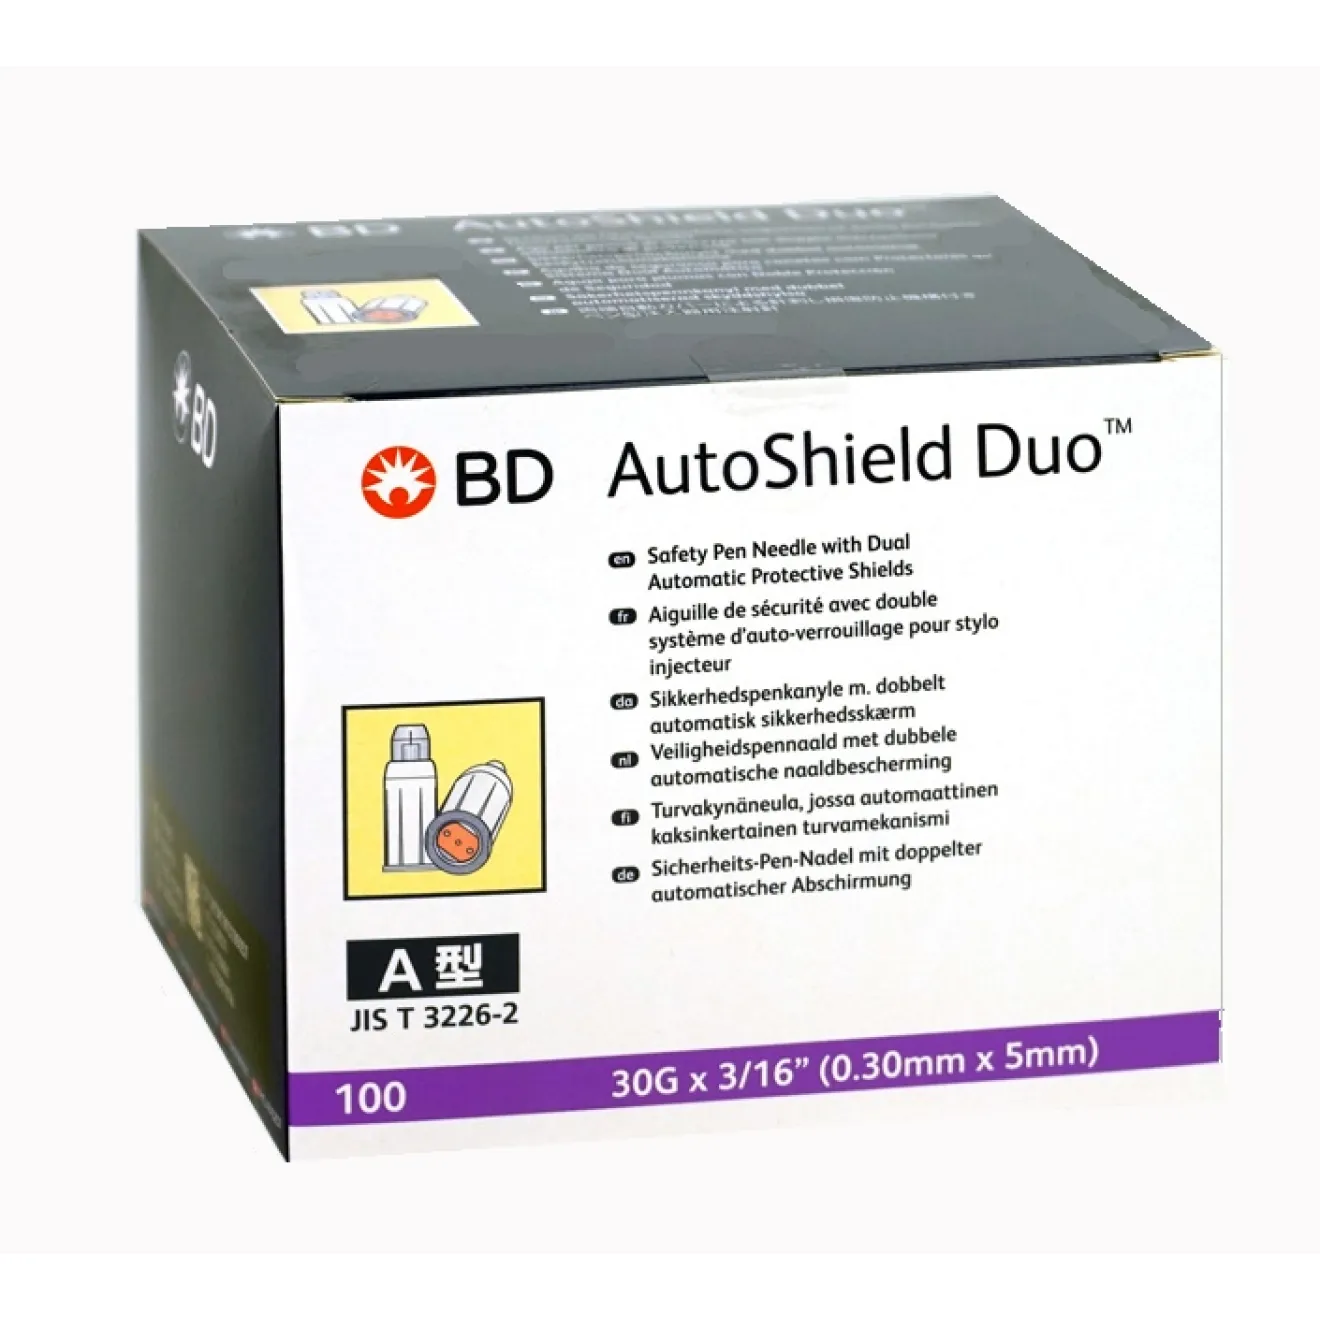 BD AUTOSHIELD Duo Sicherheits-Pen-Nadeln 5 mm 100 ST